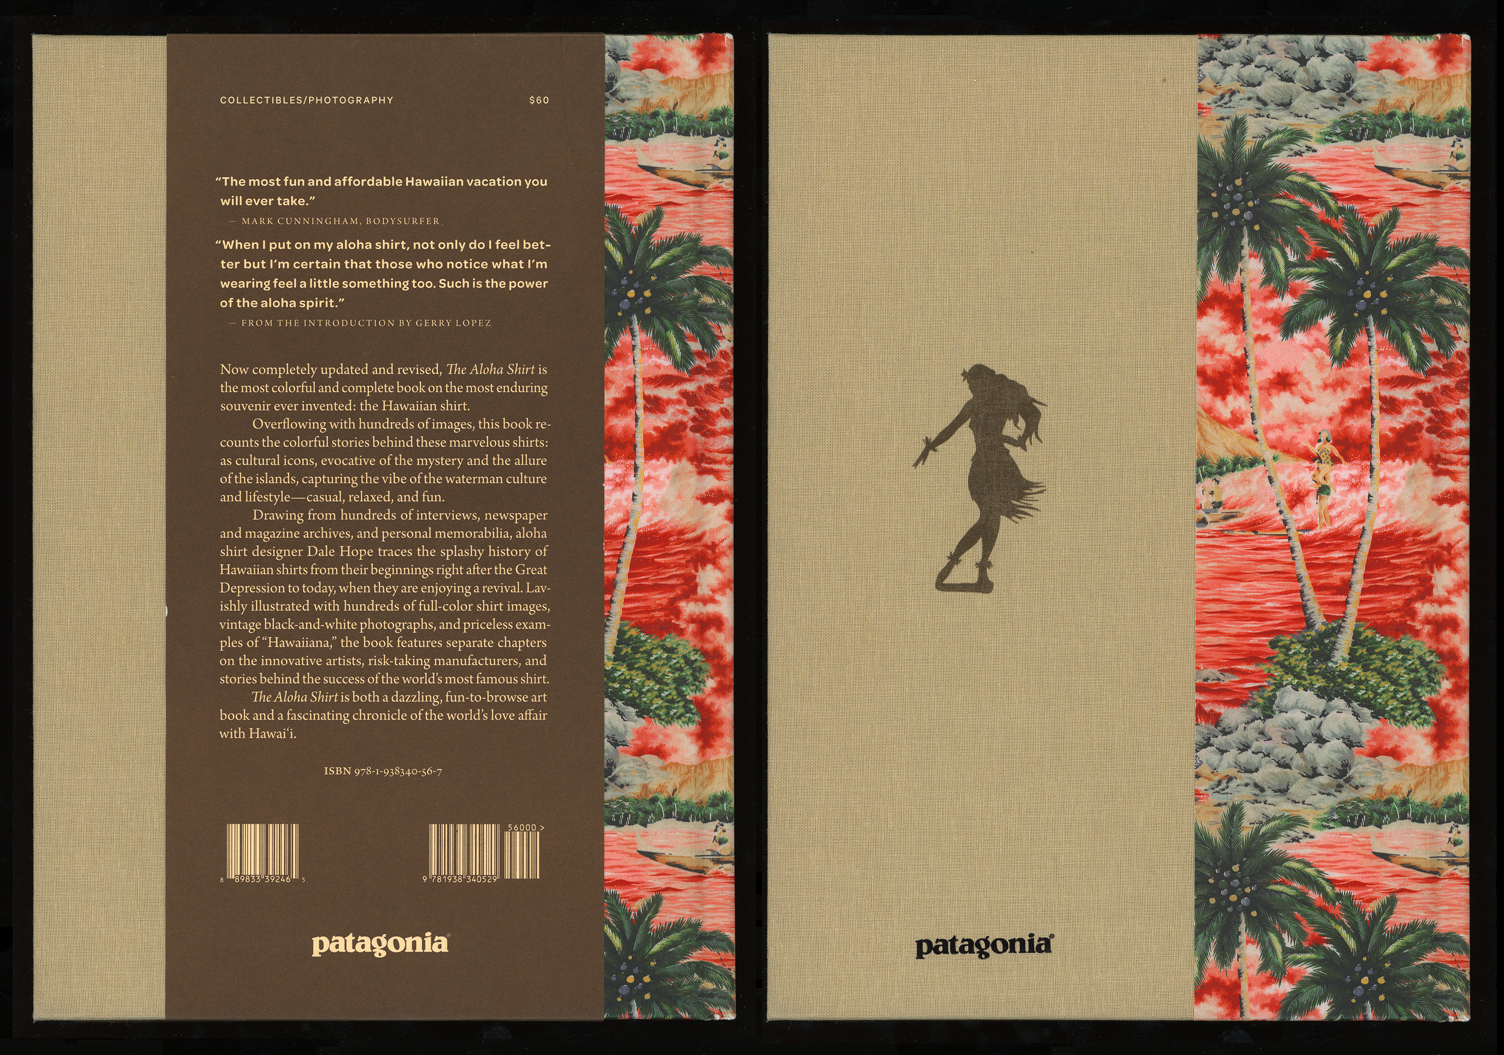 Patagonia Brand Book - Zach and Davin